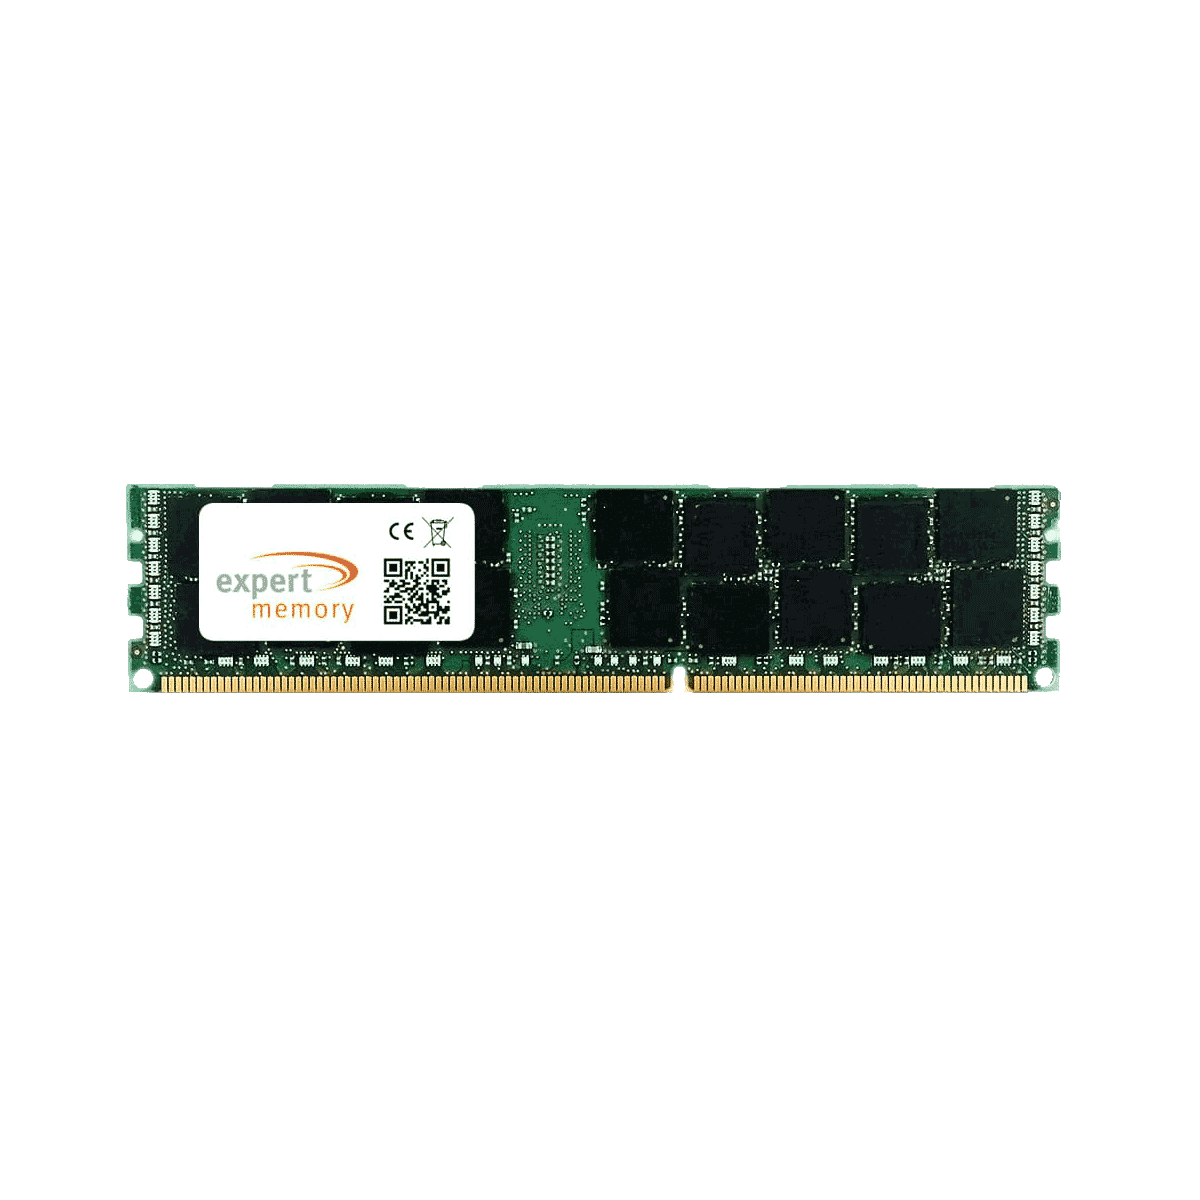 ASRock Mainboard EP2C602 16GB RDIMM MEMORY DDR3 1600 RAM GB 2Rx4 EXPERT Upgrade 16 Workstation/Server Memory